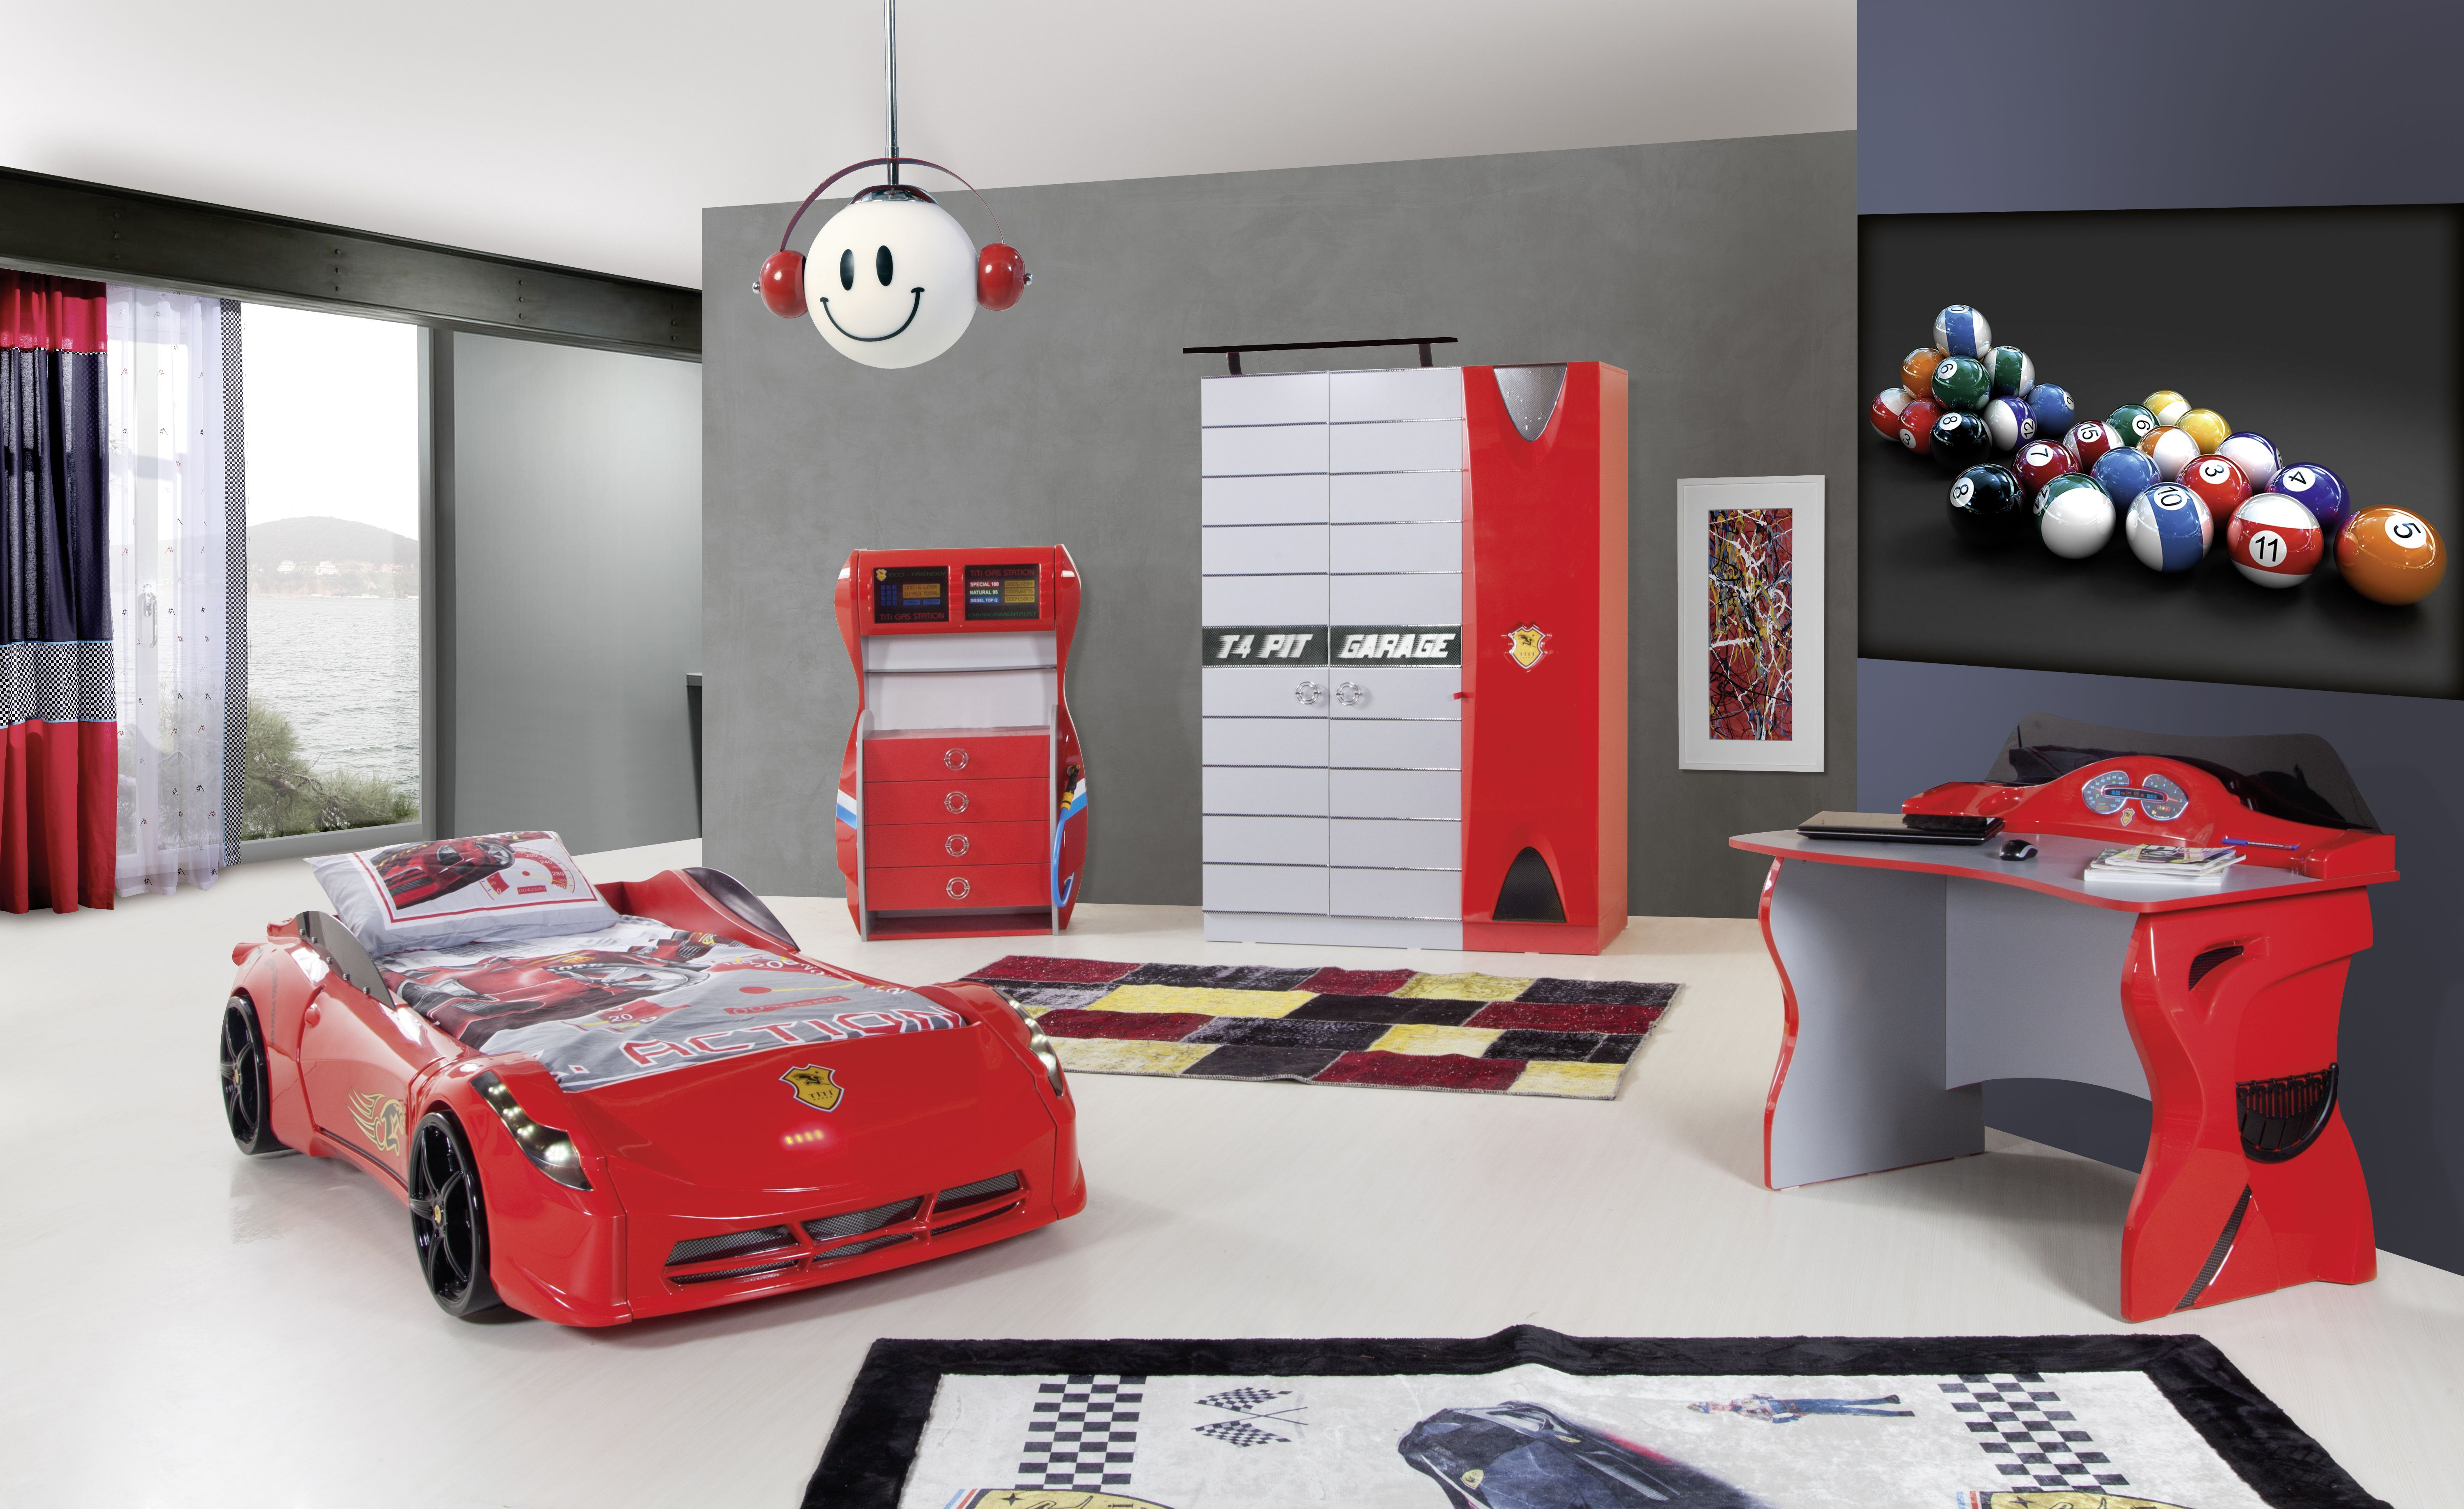 Ferrari Racer Red Bedroom Set Titi 3 Piece Bedroom Set Car throughout sizing 5993 X 3670